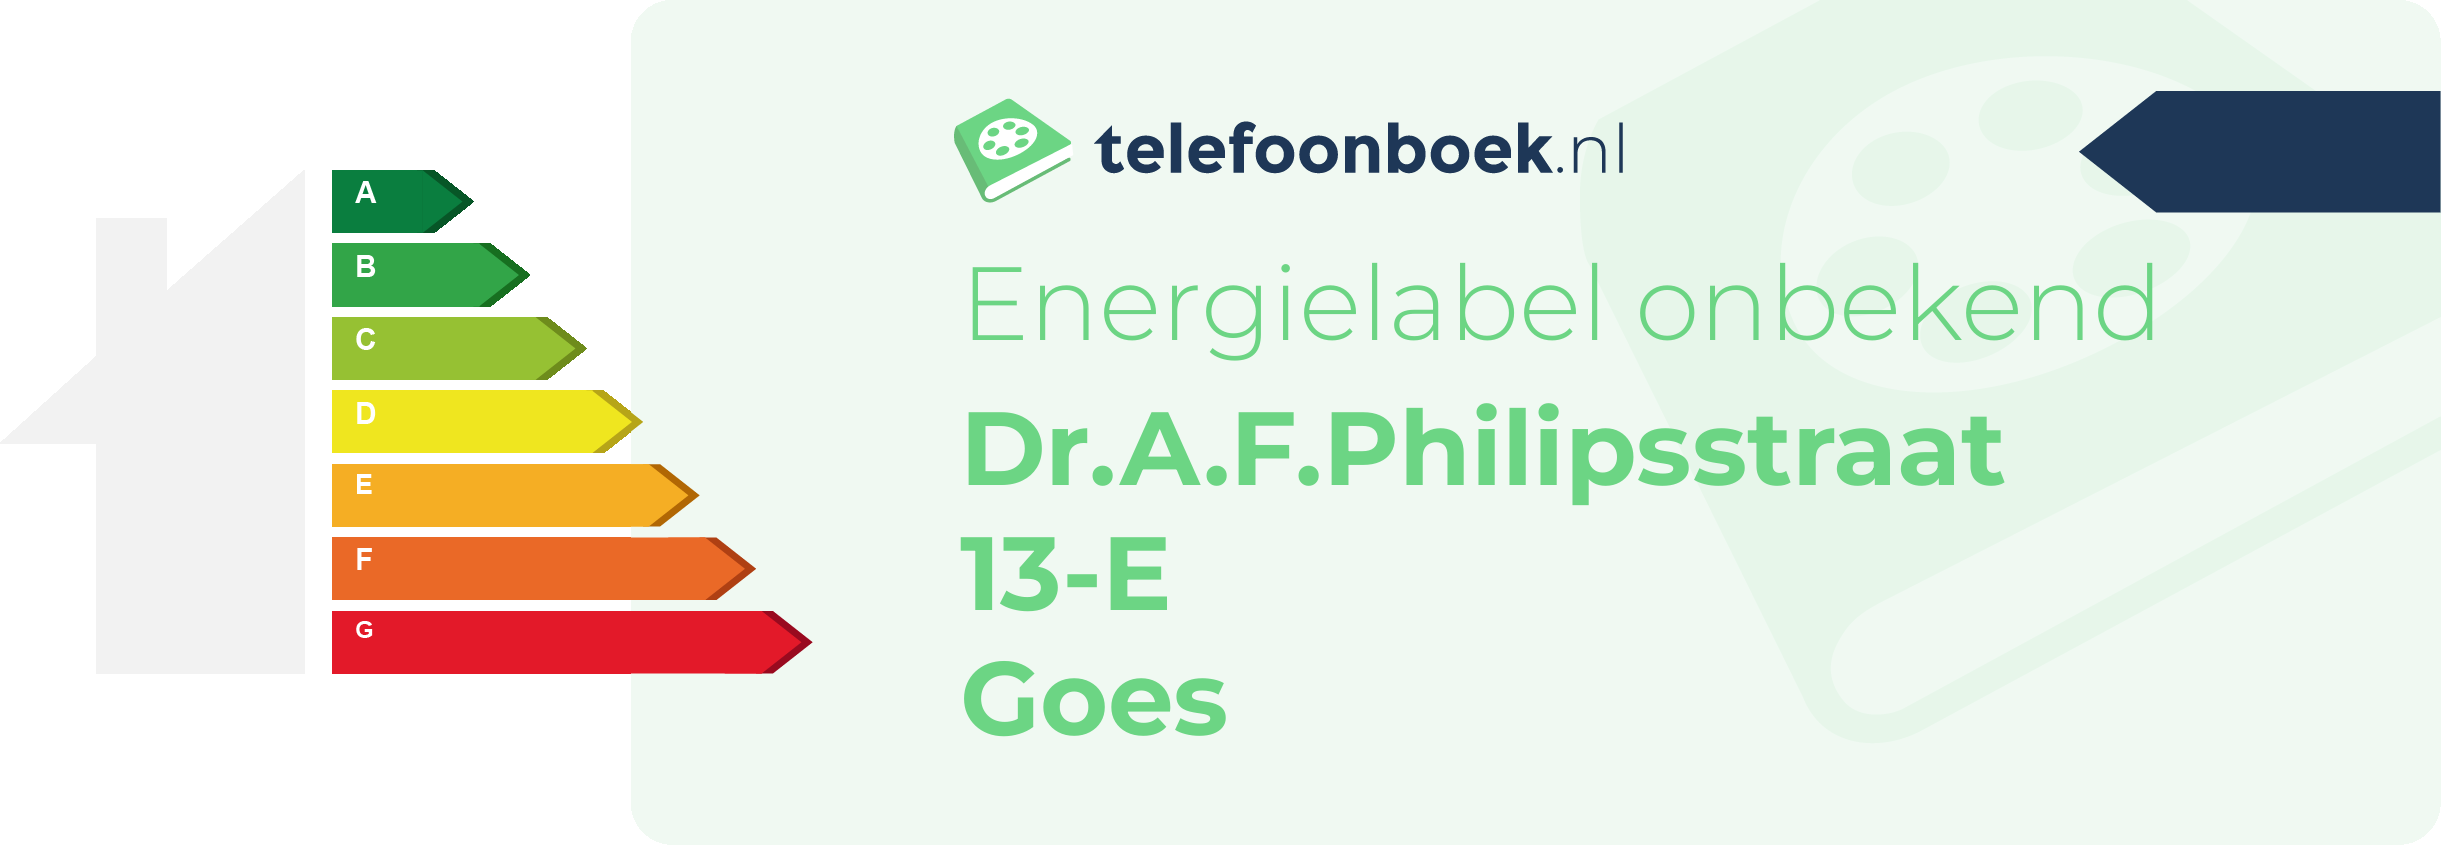 Energielabel Dr.A.F.Philipsstraat 13-E Goes